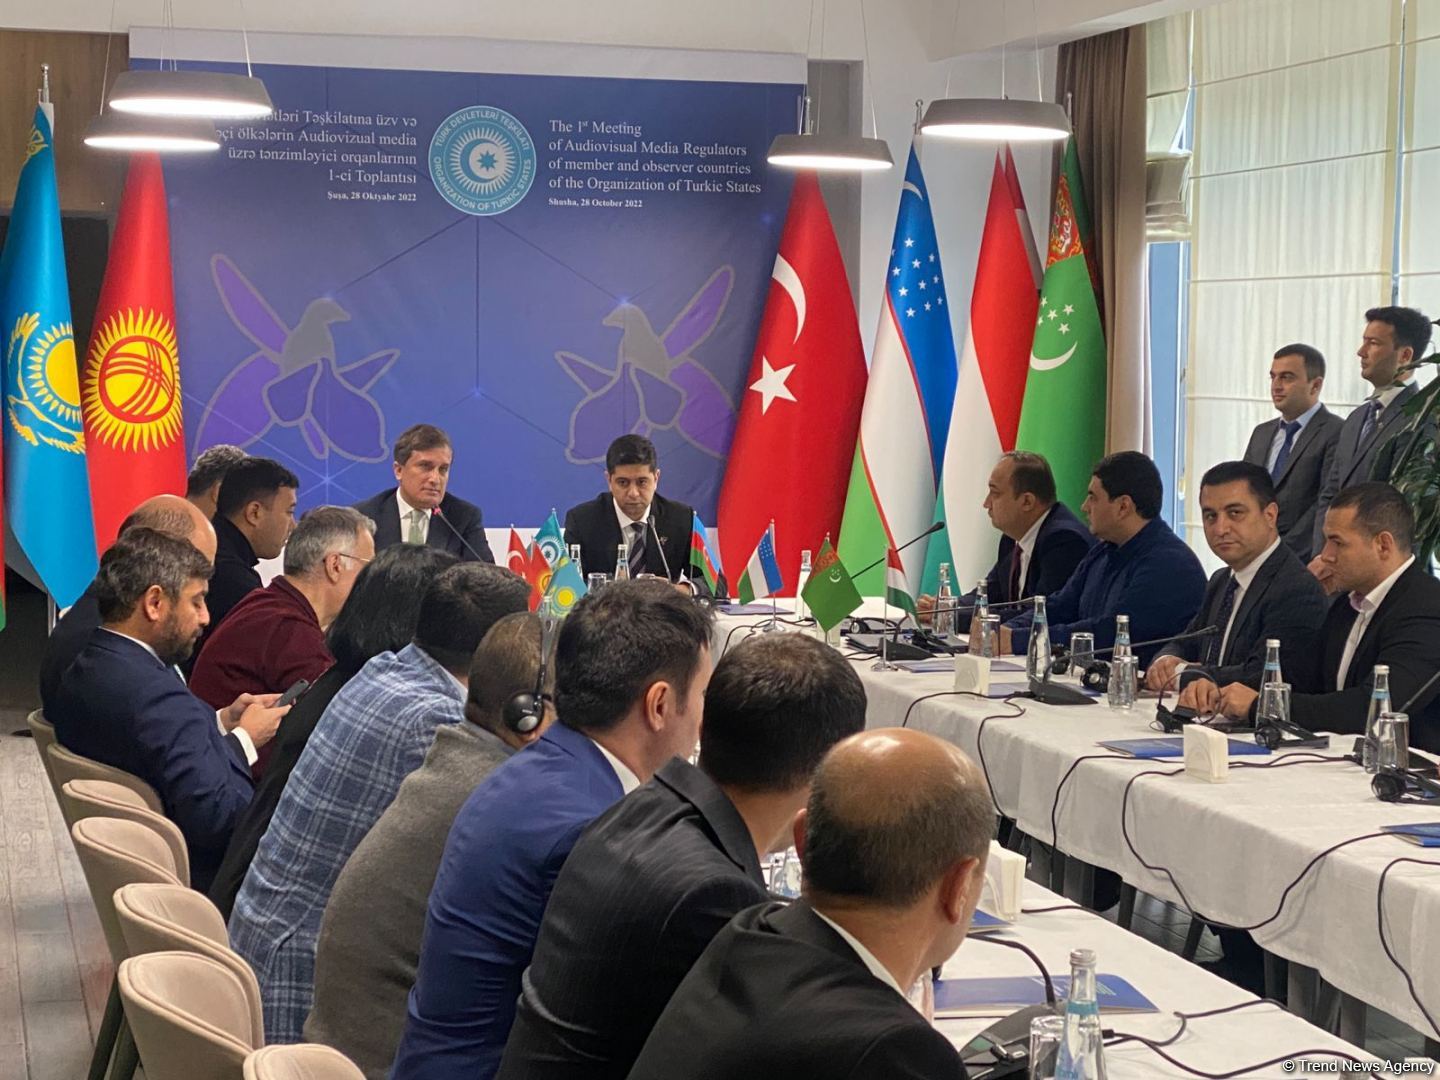 Shusha Declaration of intent signed within 1st meeting of Audiovisual Media Regulators of Organization of Turkic States (PHOTO)